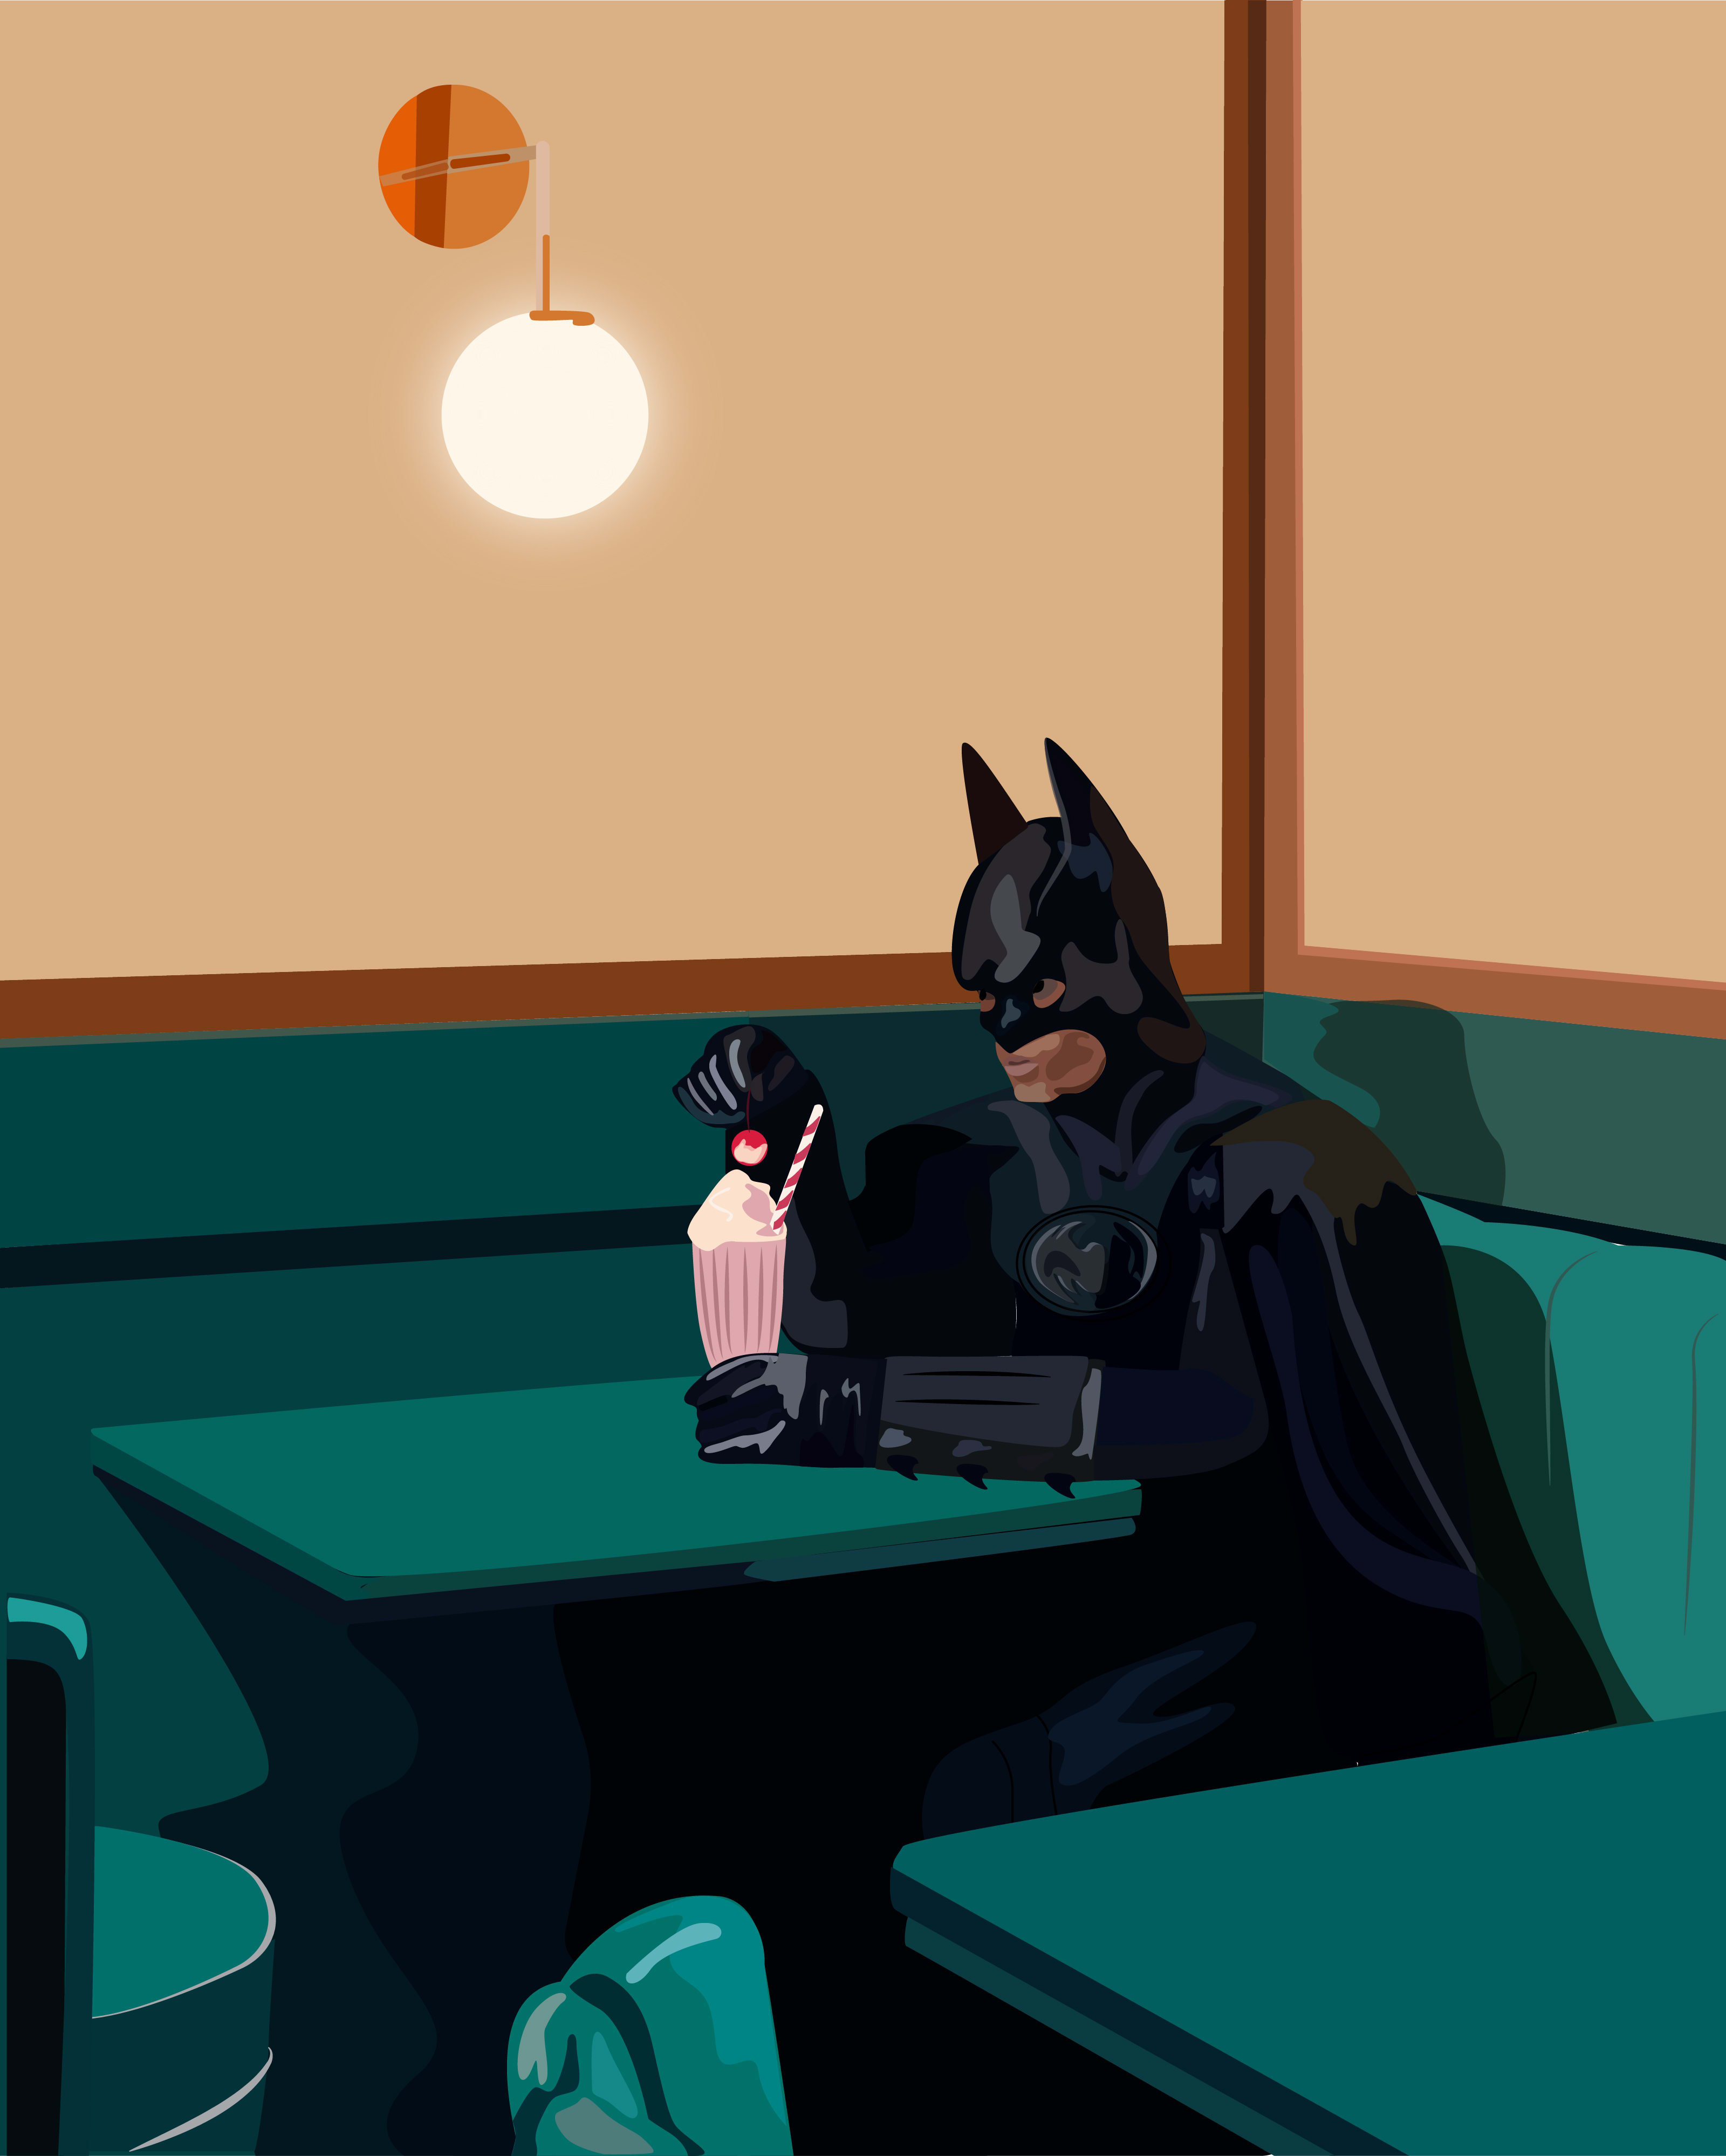 Flat illustration of batman superhero in cafe by Daryna_art | Fiverr